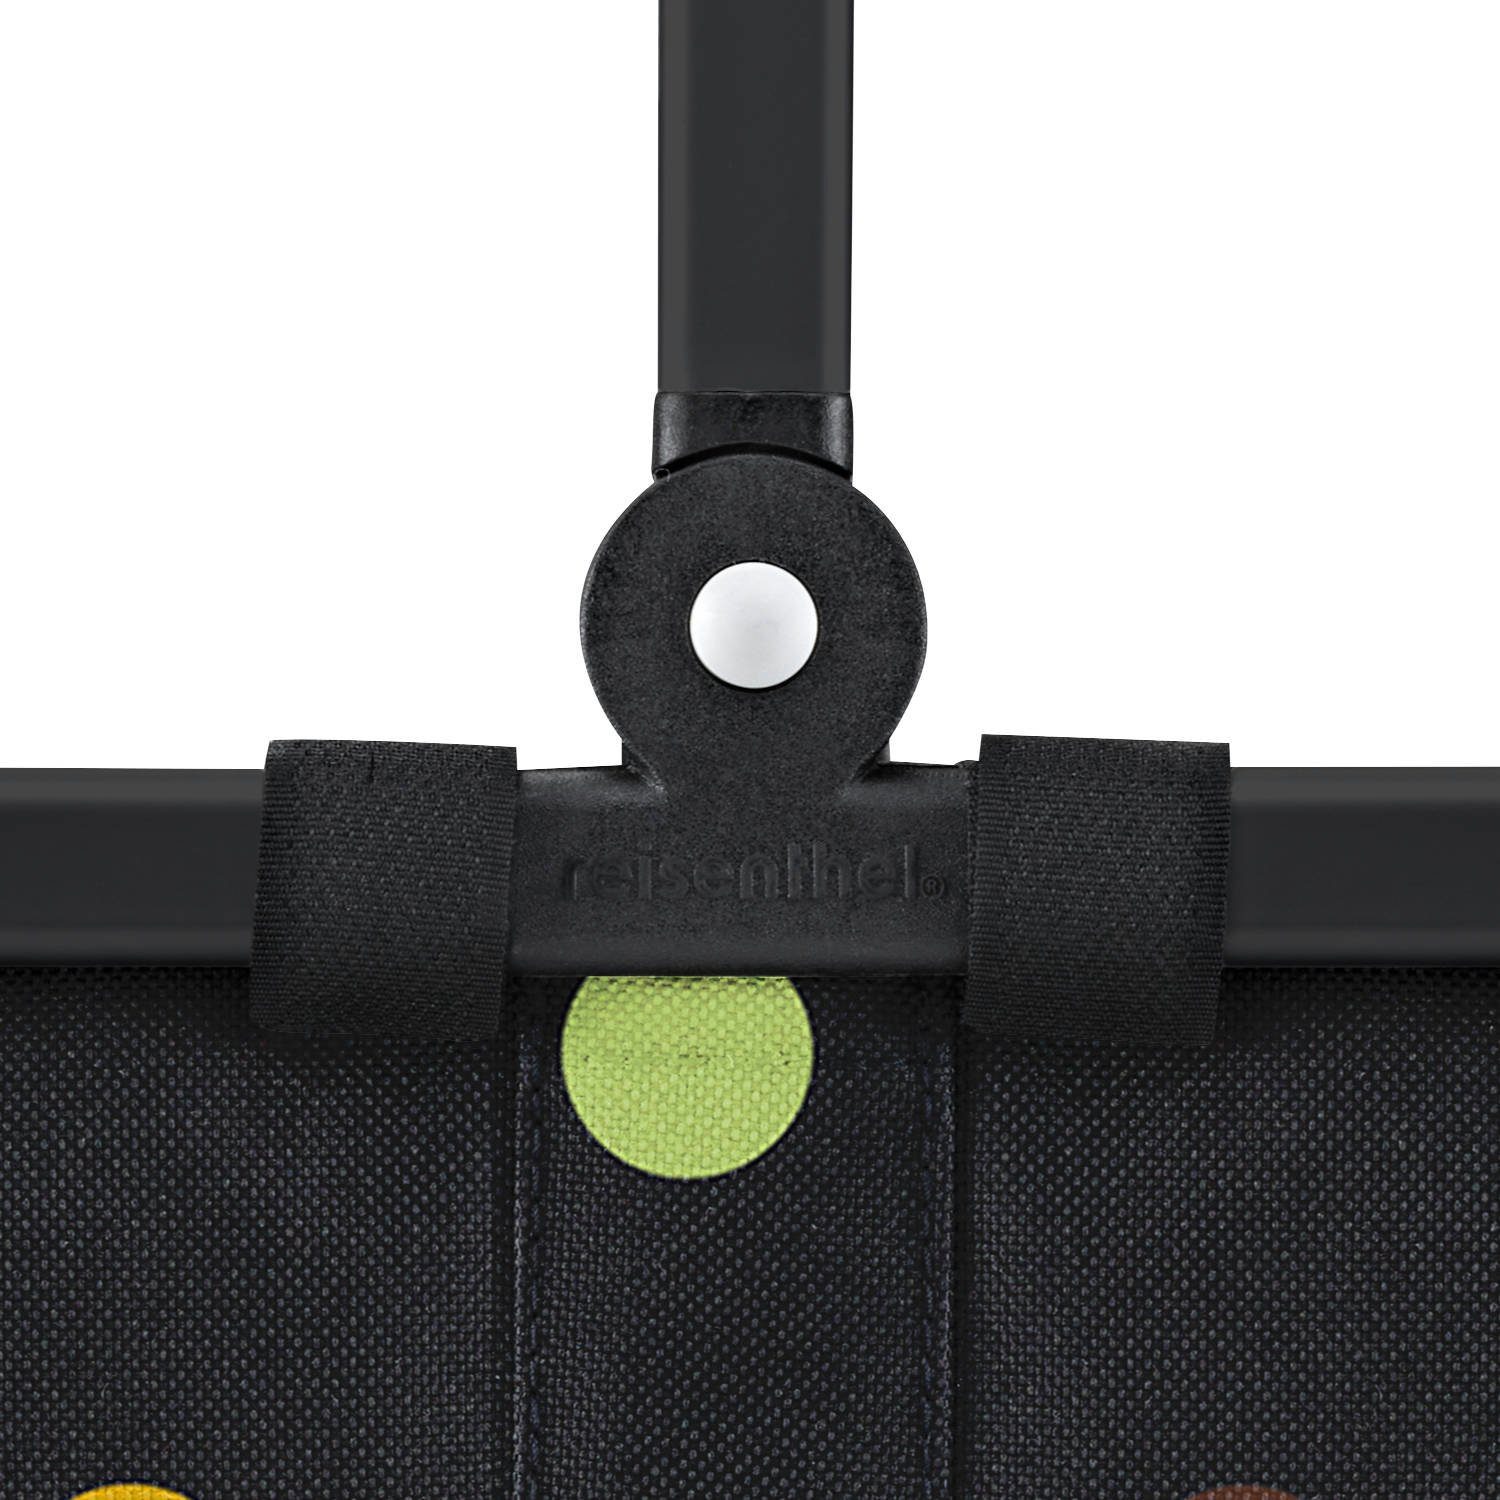 - Farbauswahl, REISENTHEL® Reisenthel Einkaufskorb carrybag XS frame XS Korb dots